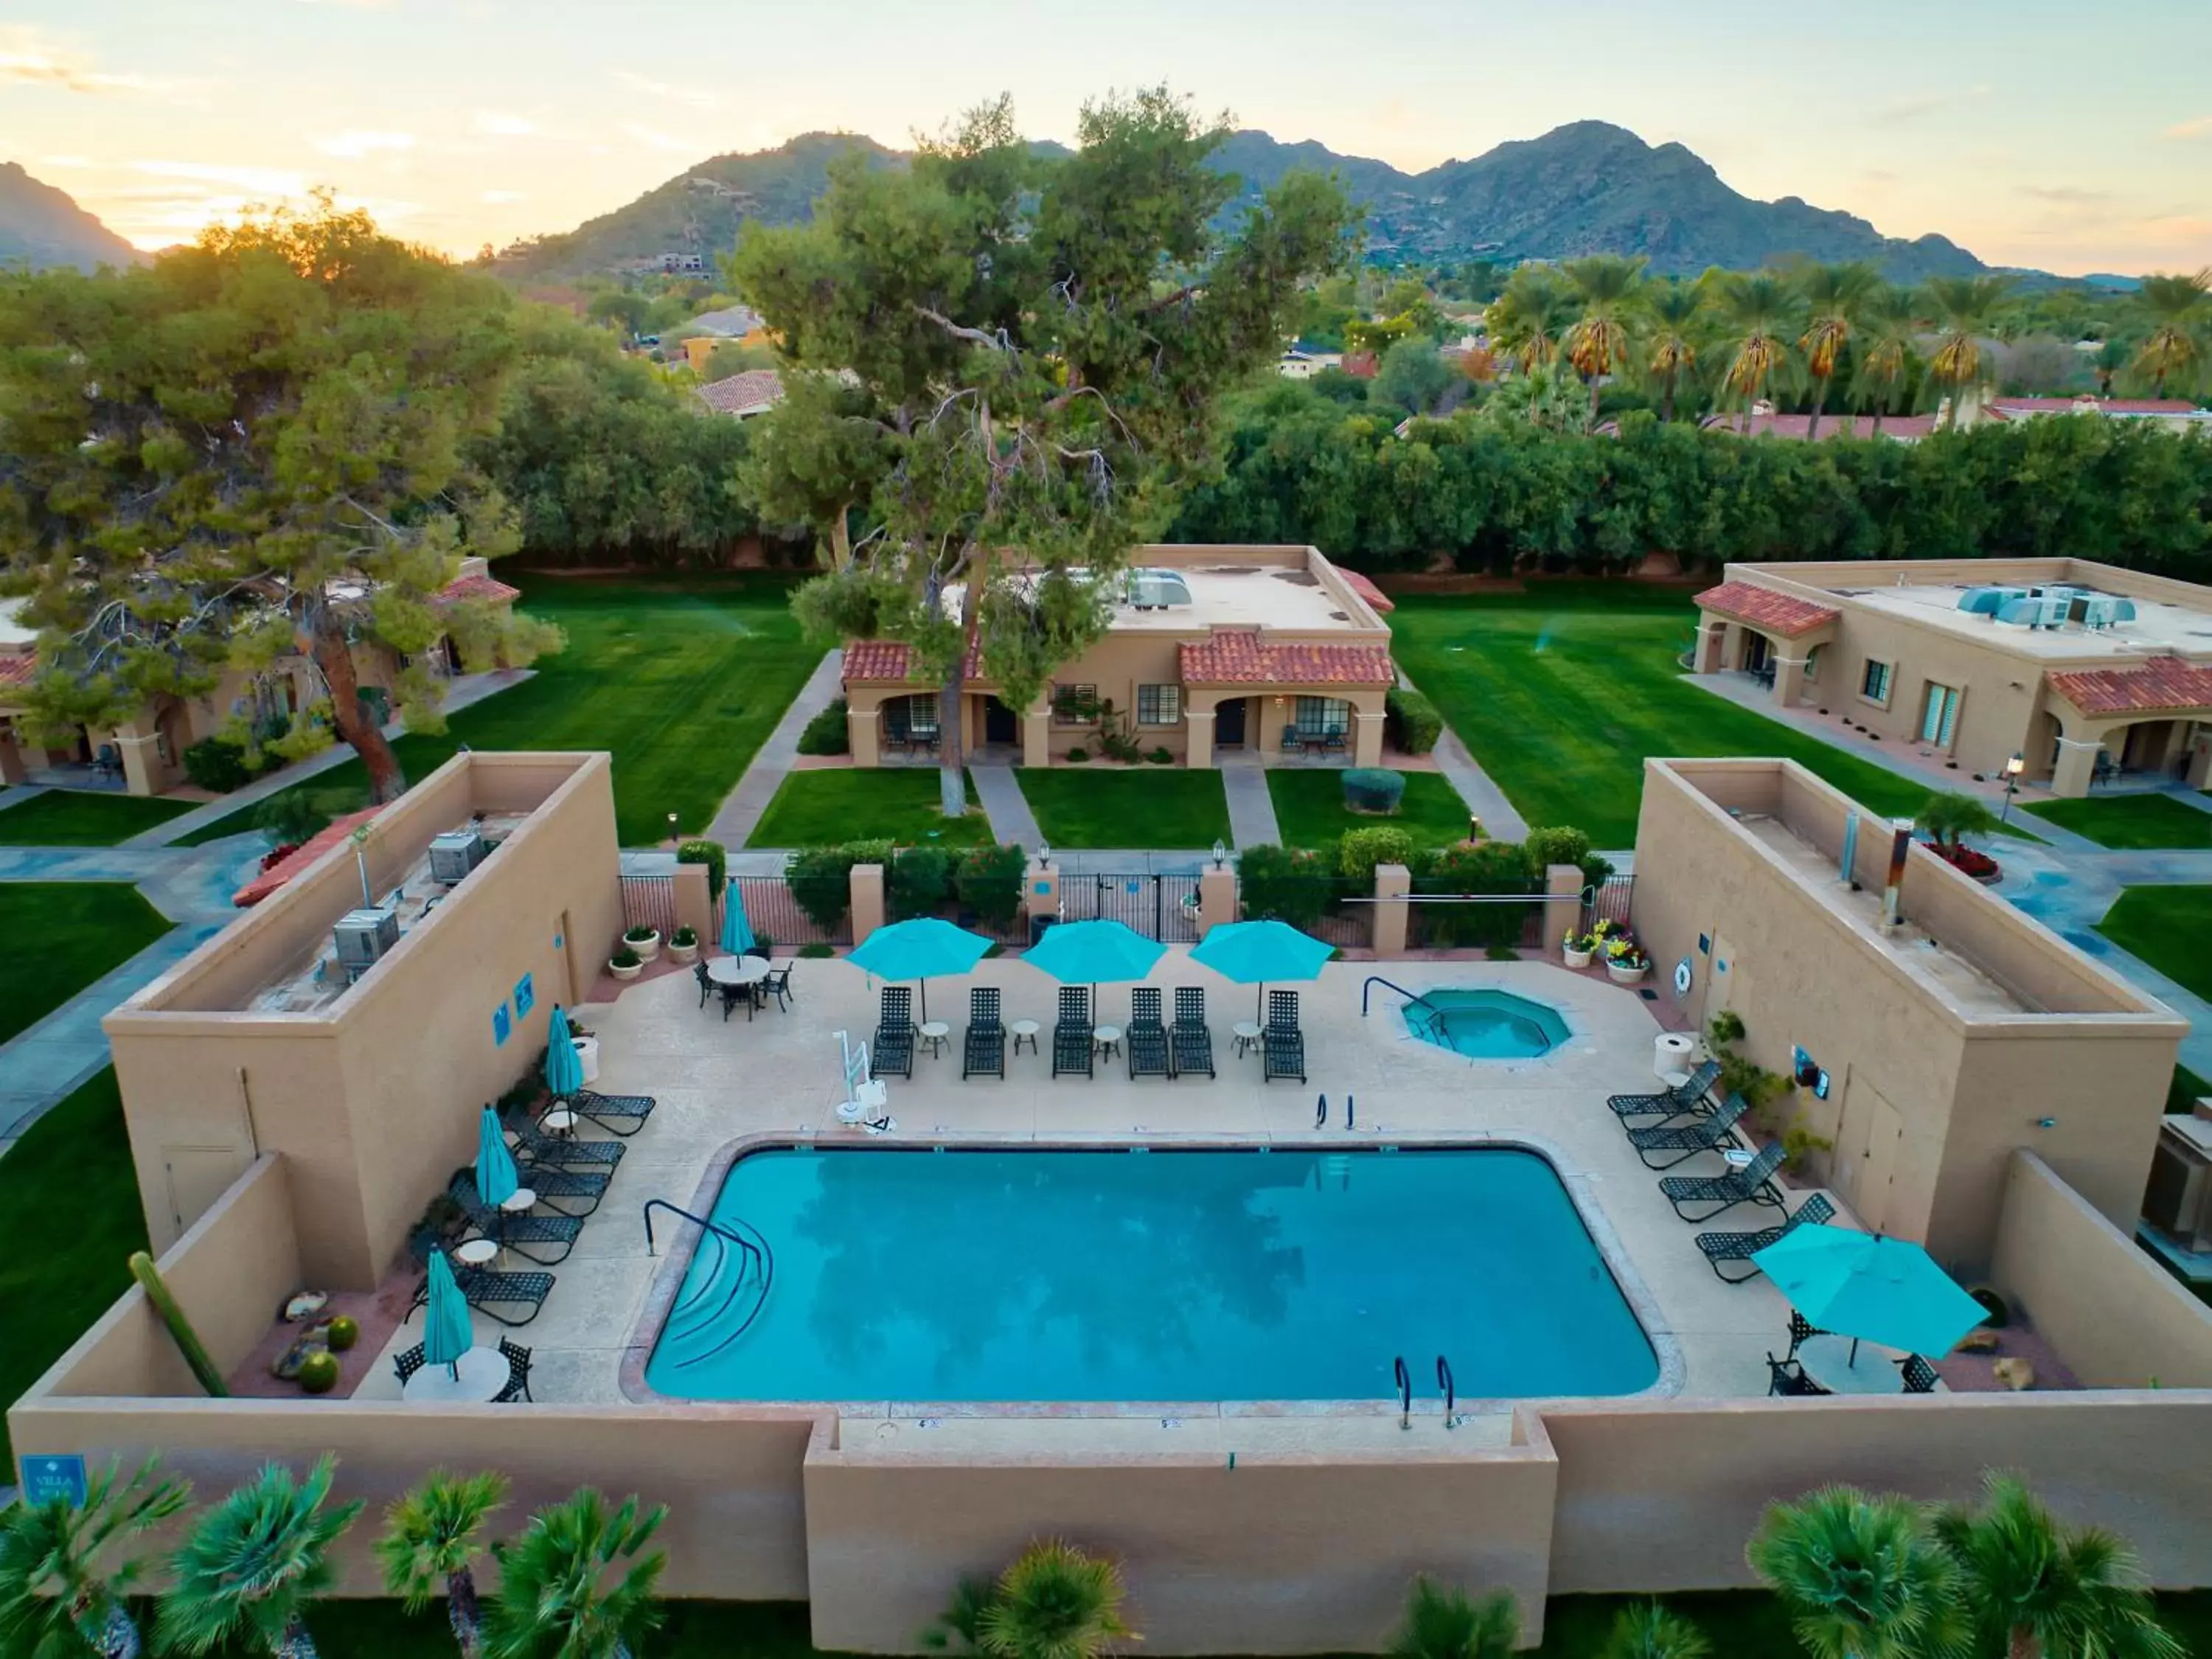 Swimming pool, Pool View in The Scottsdale Plaza Resort & Villas